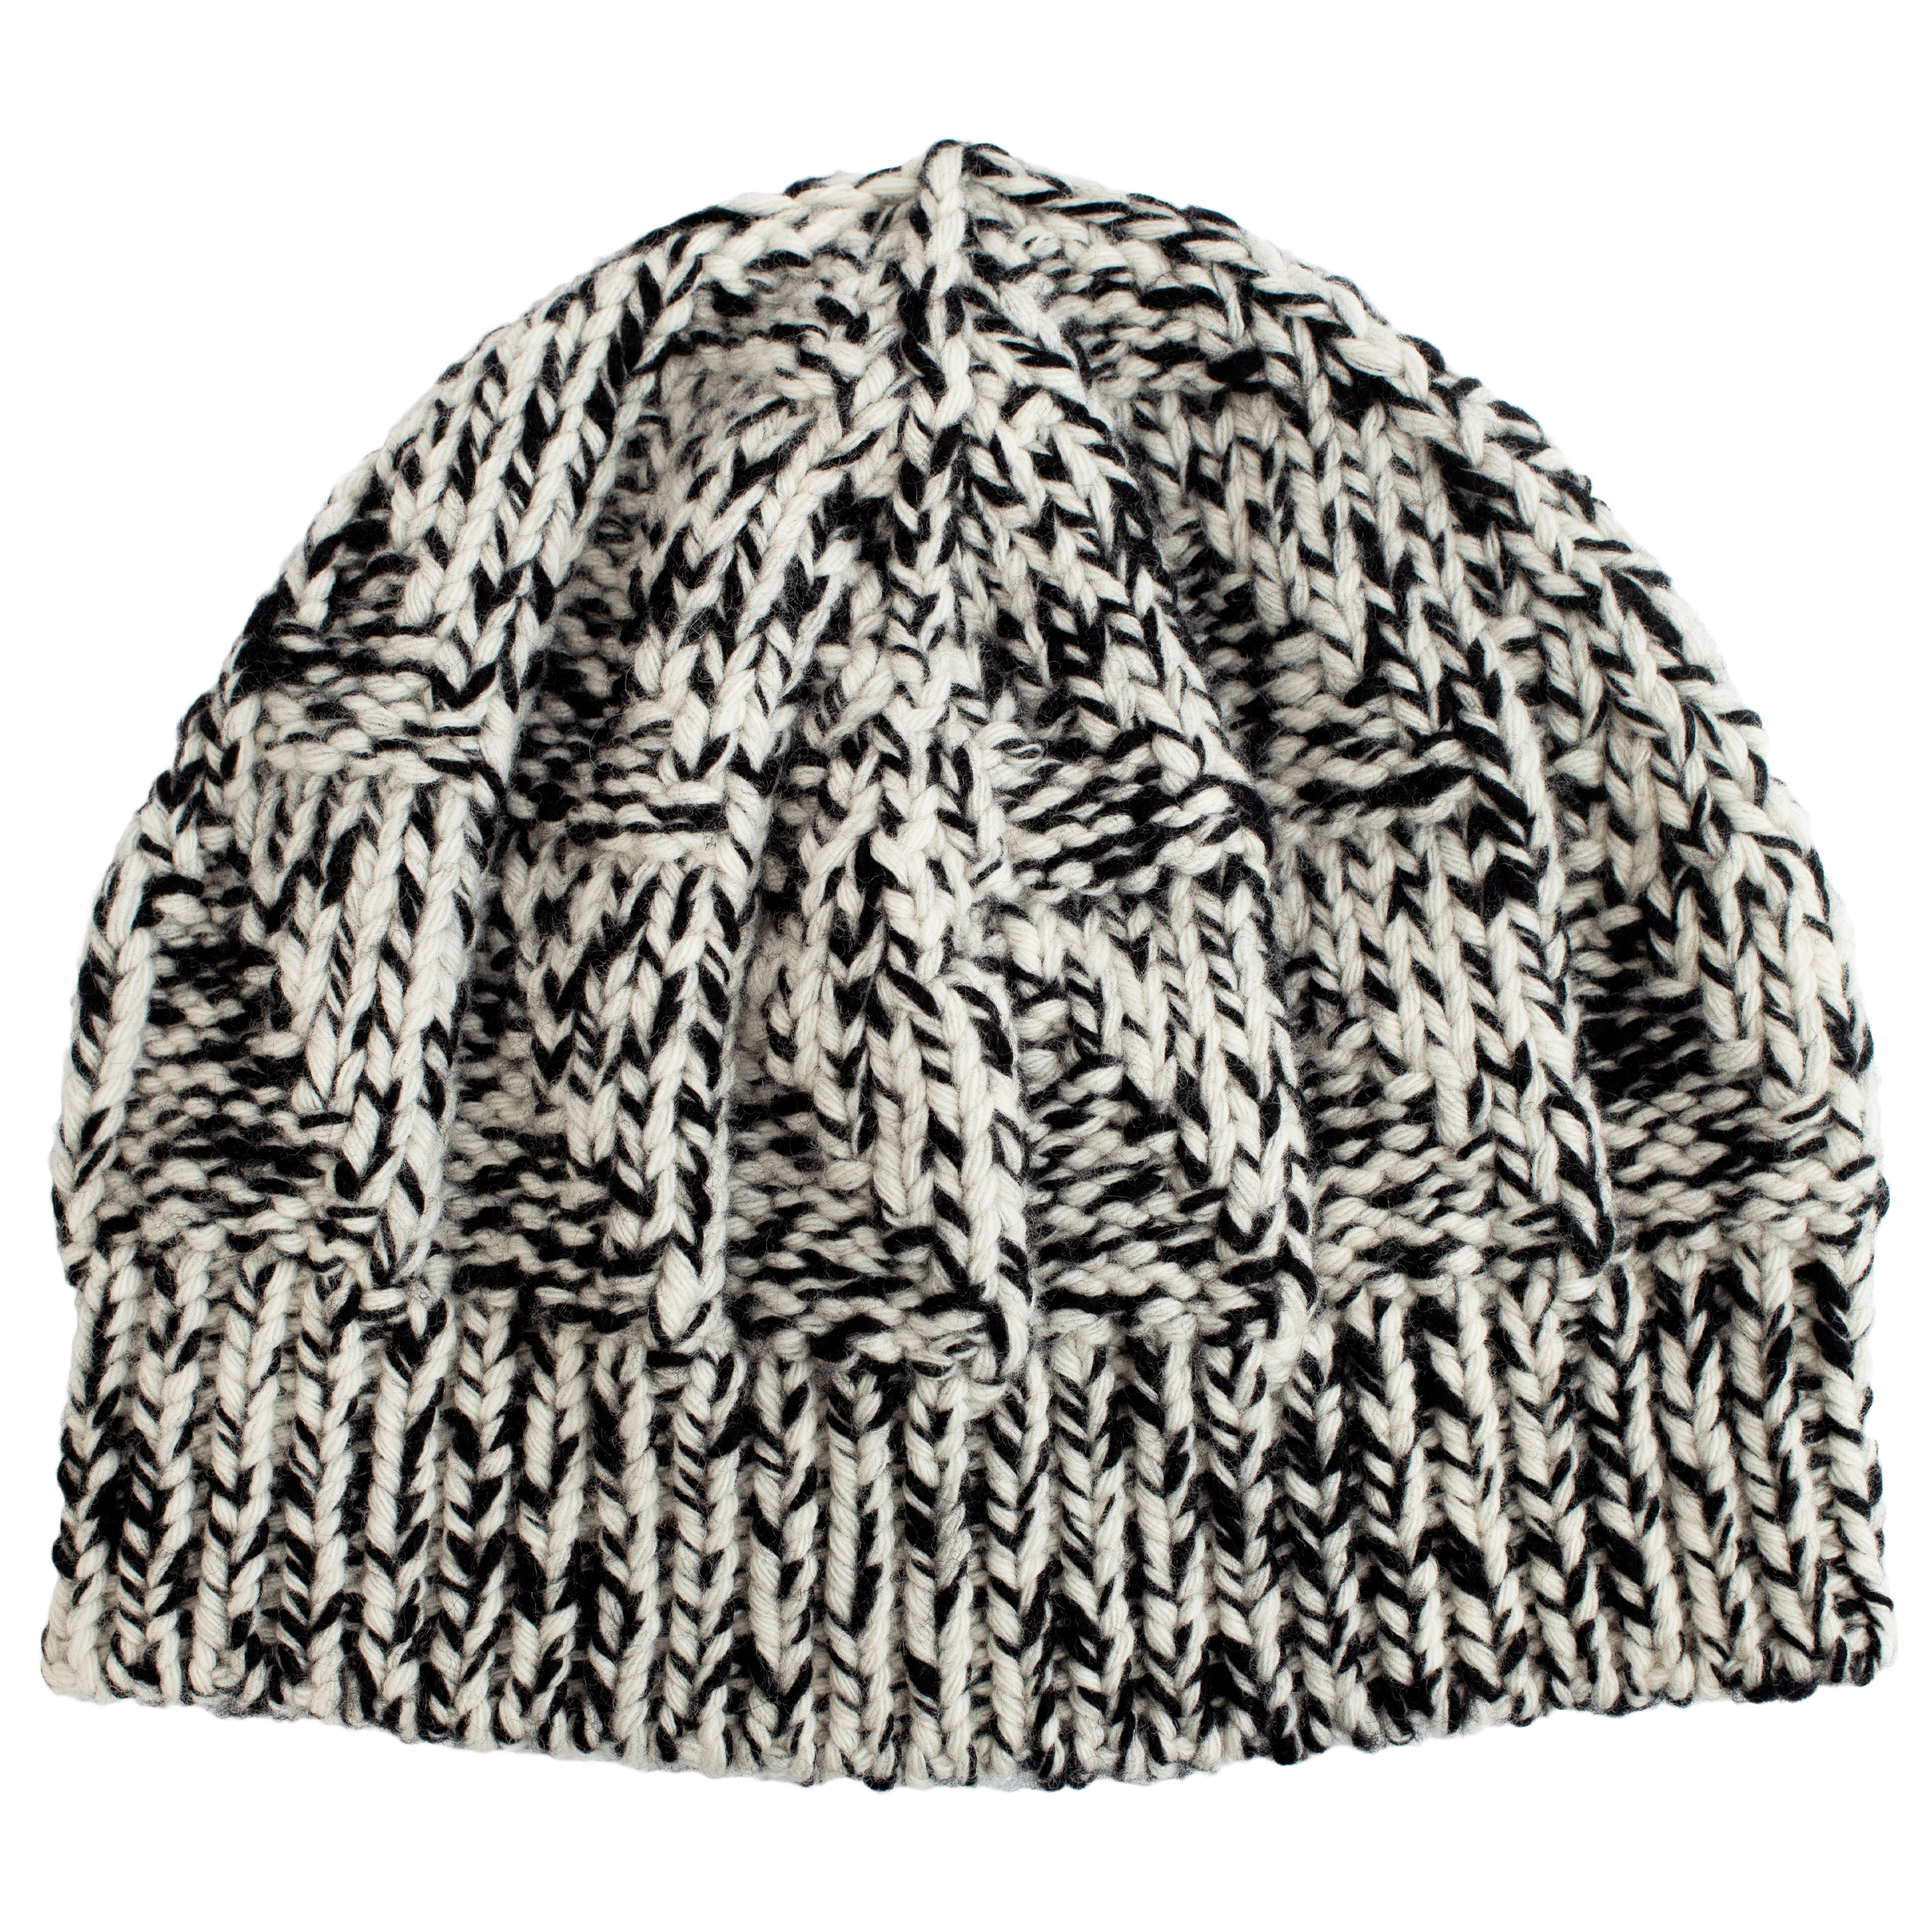 Черно-белая шапка крупной вязки из шерсти Jil Sander JPUT769542/MTY20118/060, размер One Size